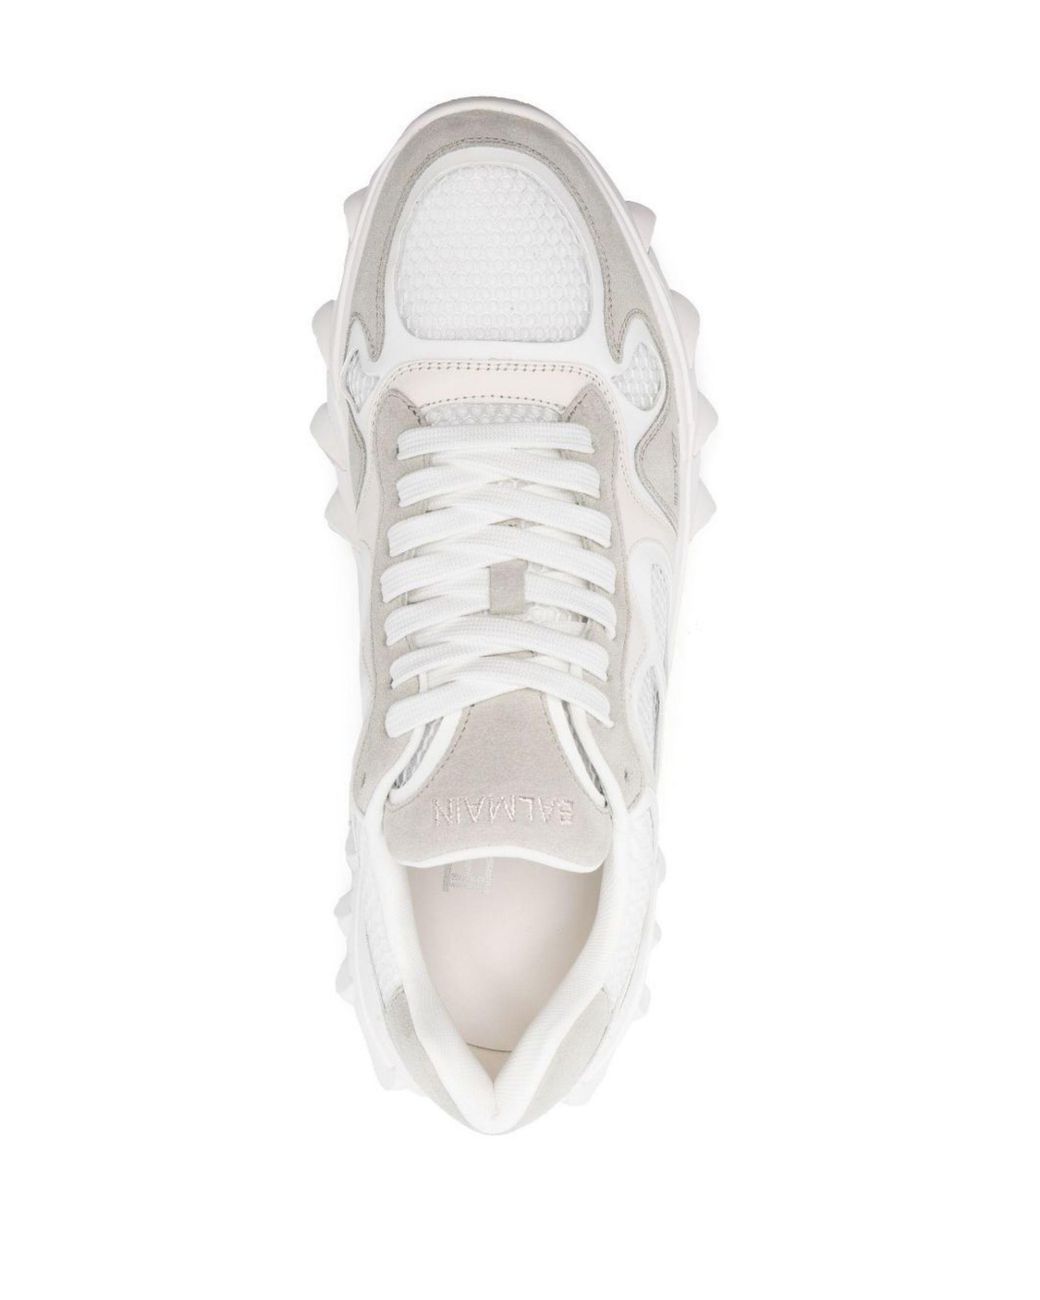 Balmain B-east Suede Sneakers in White for Men | Lyst